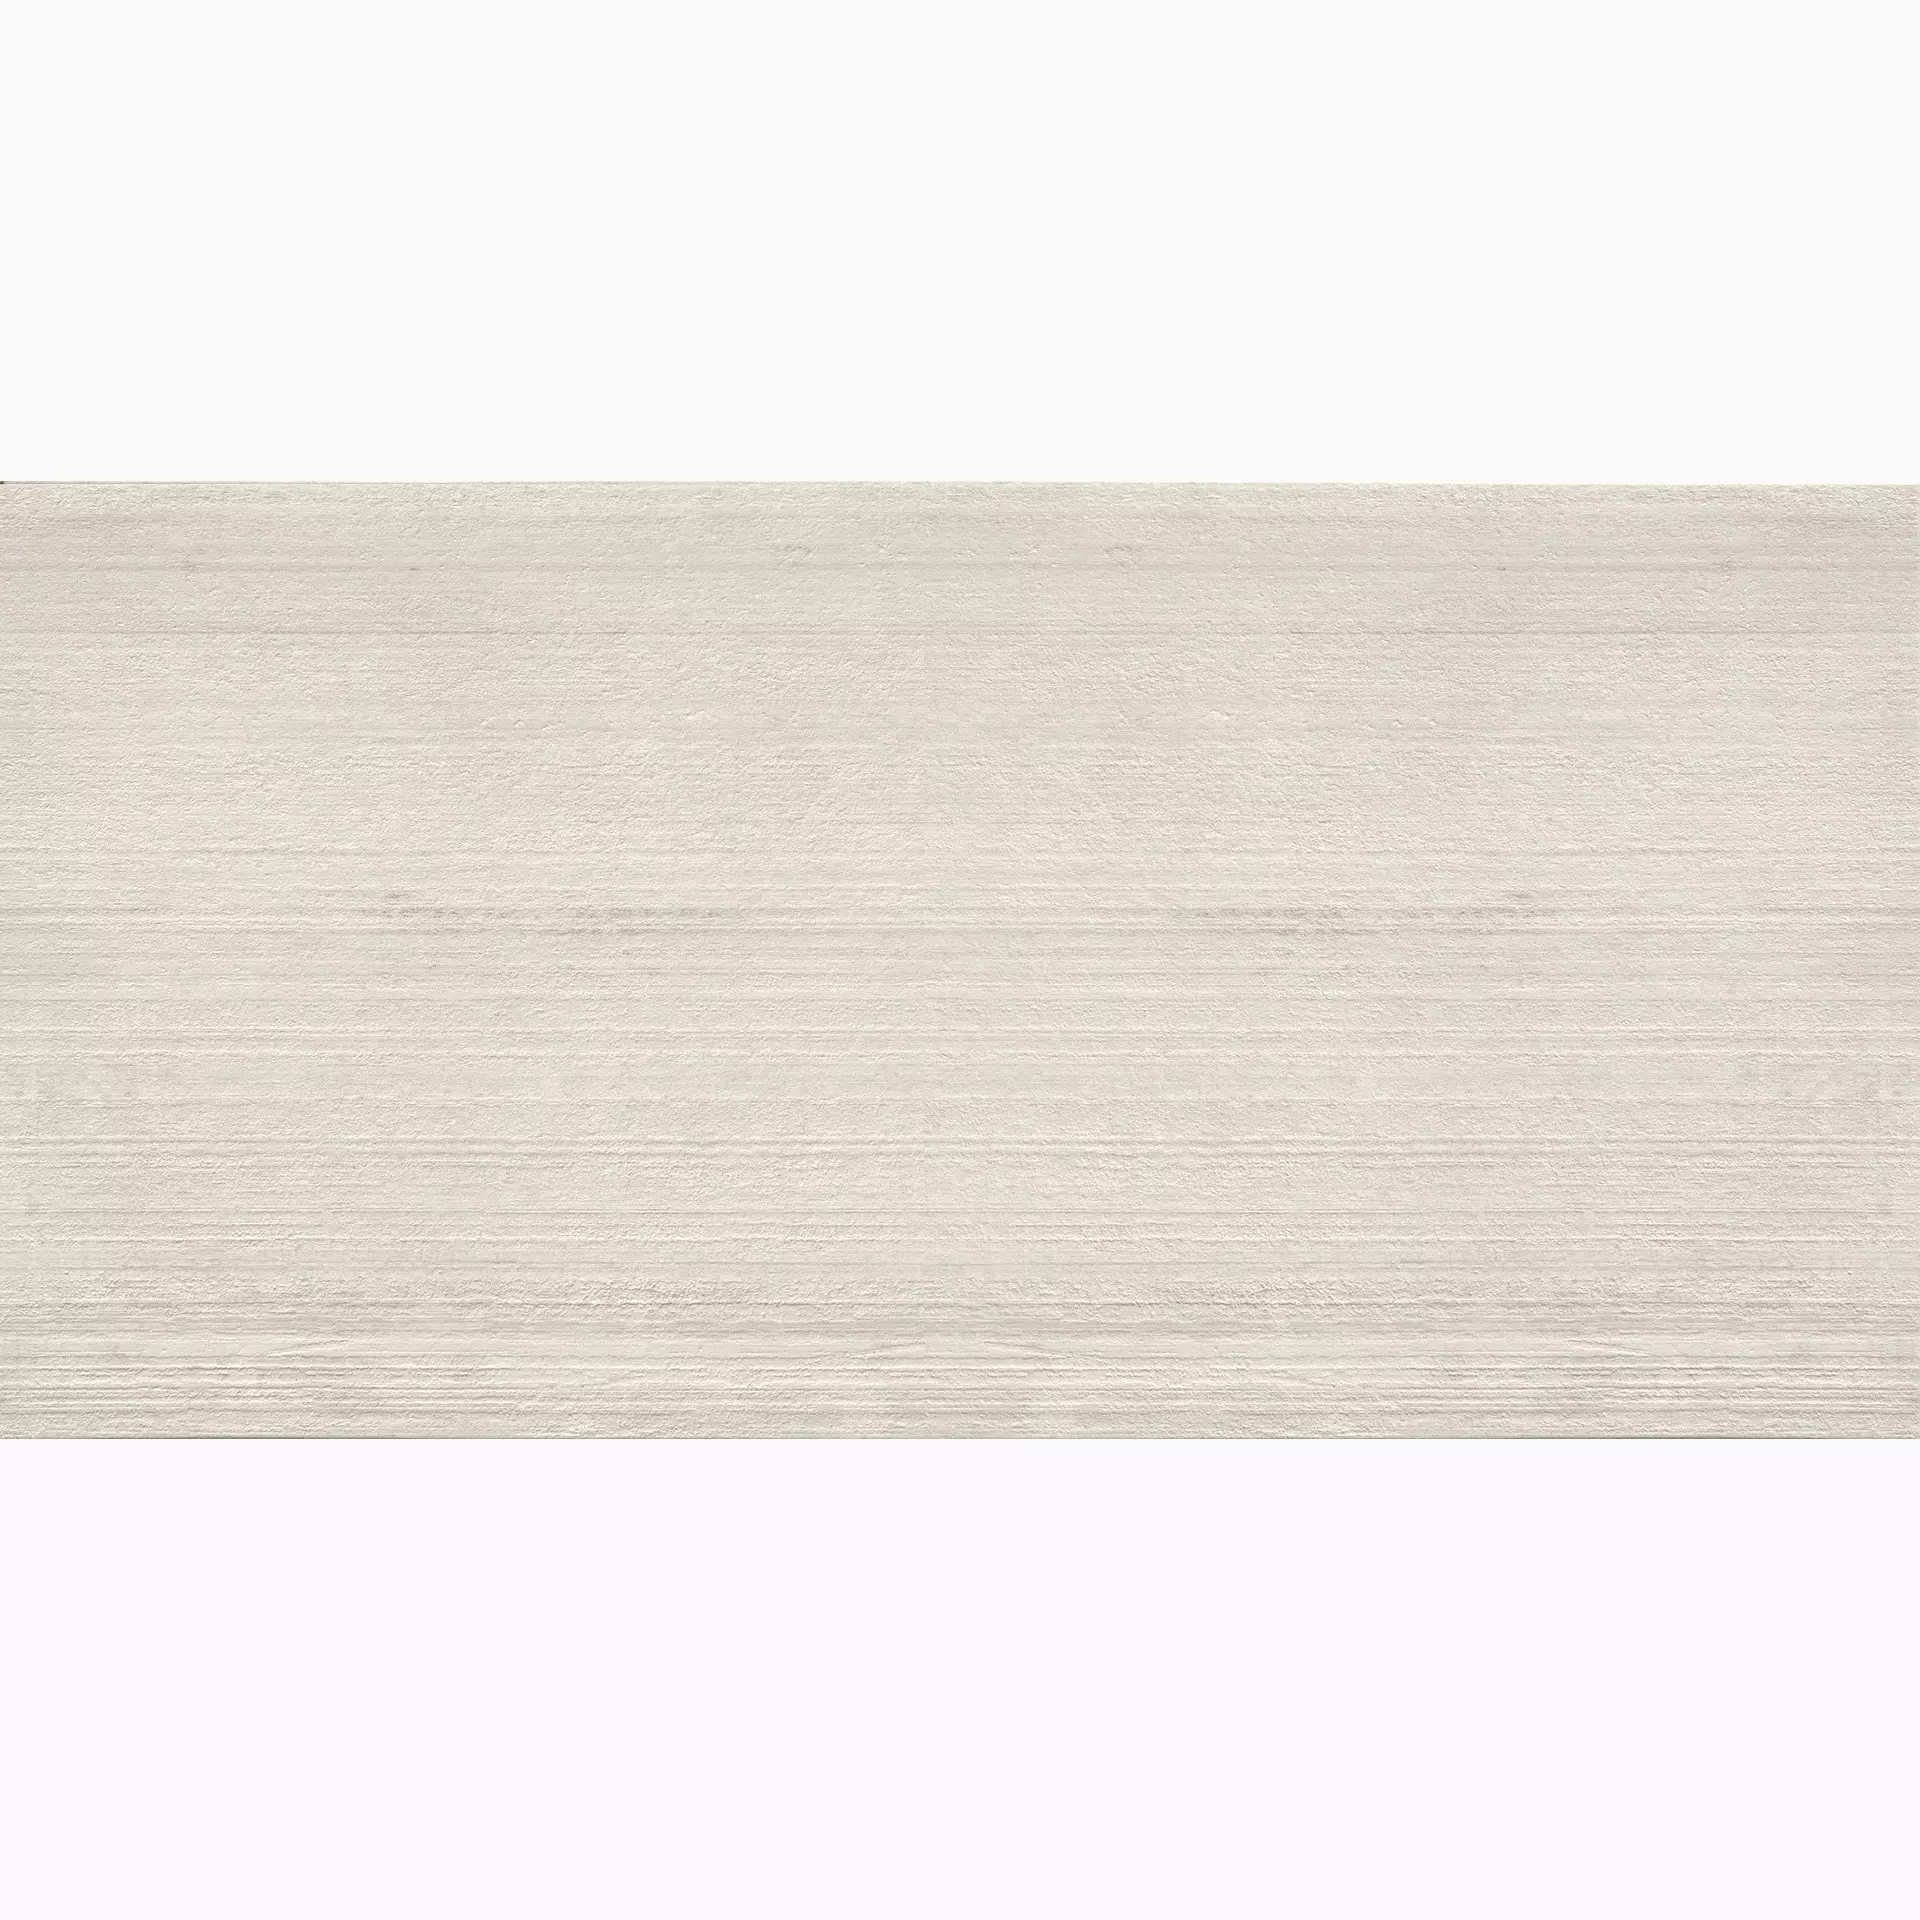 Casalgrande Cemento Bianco Cassero – Antibacterial 3795765 30x60cm rectified 9mm